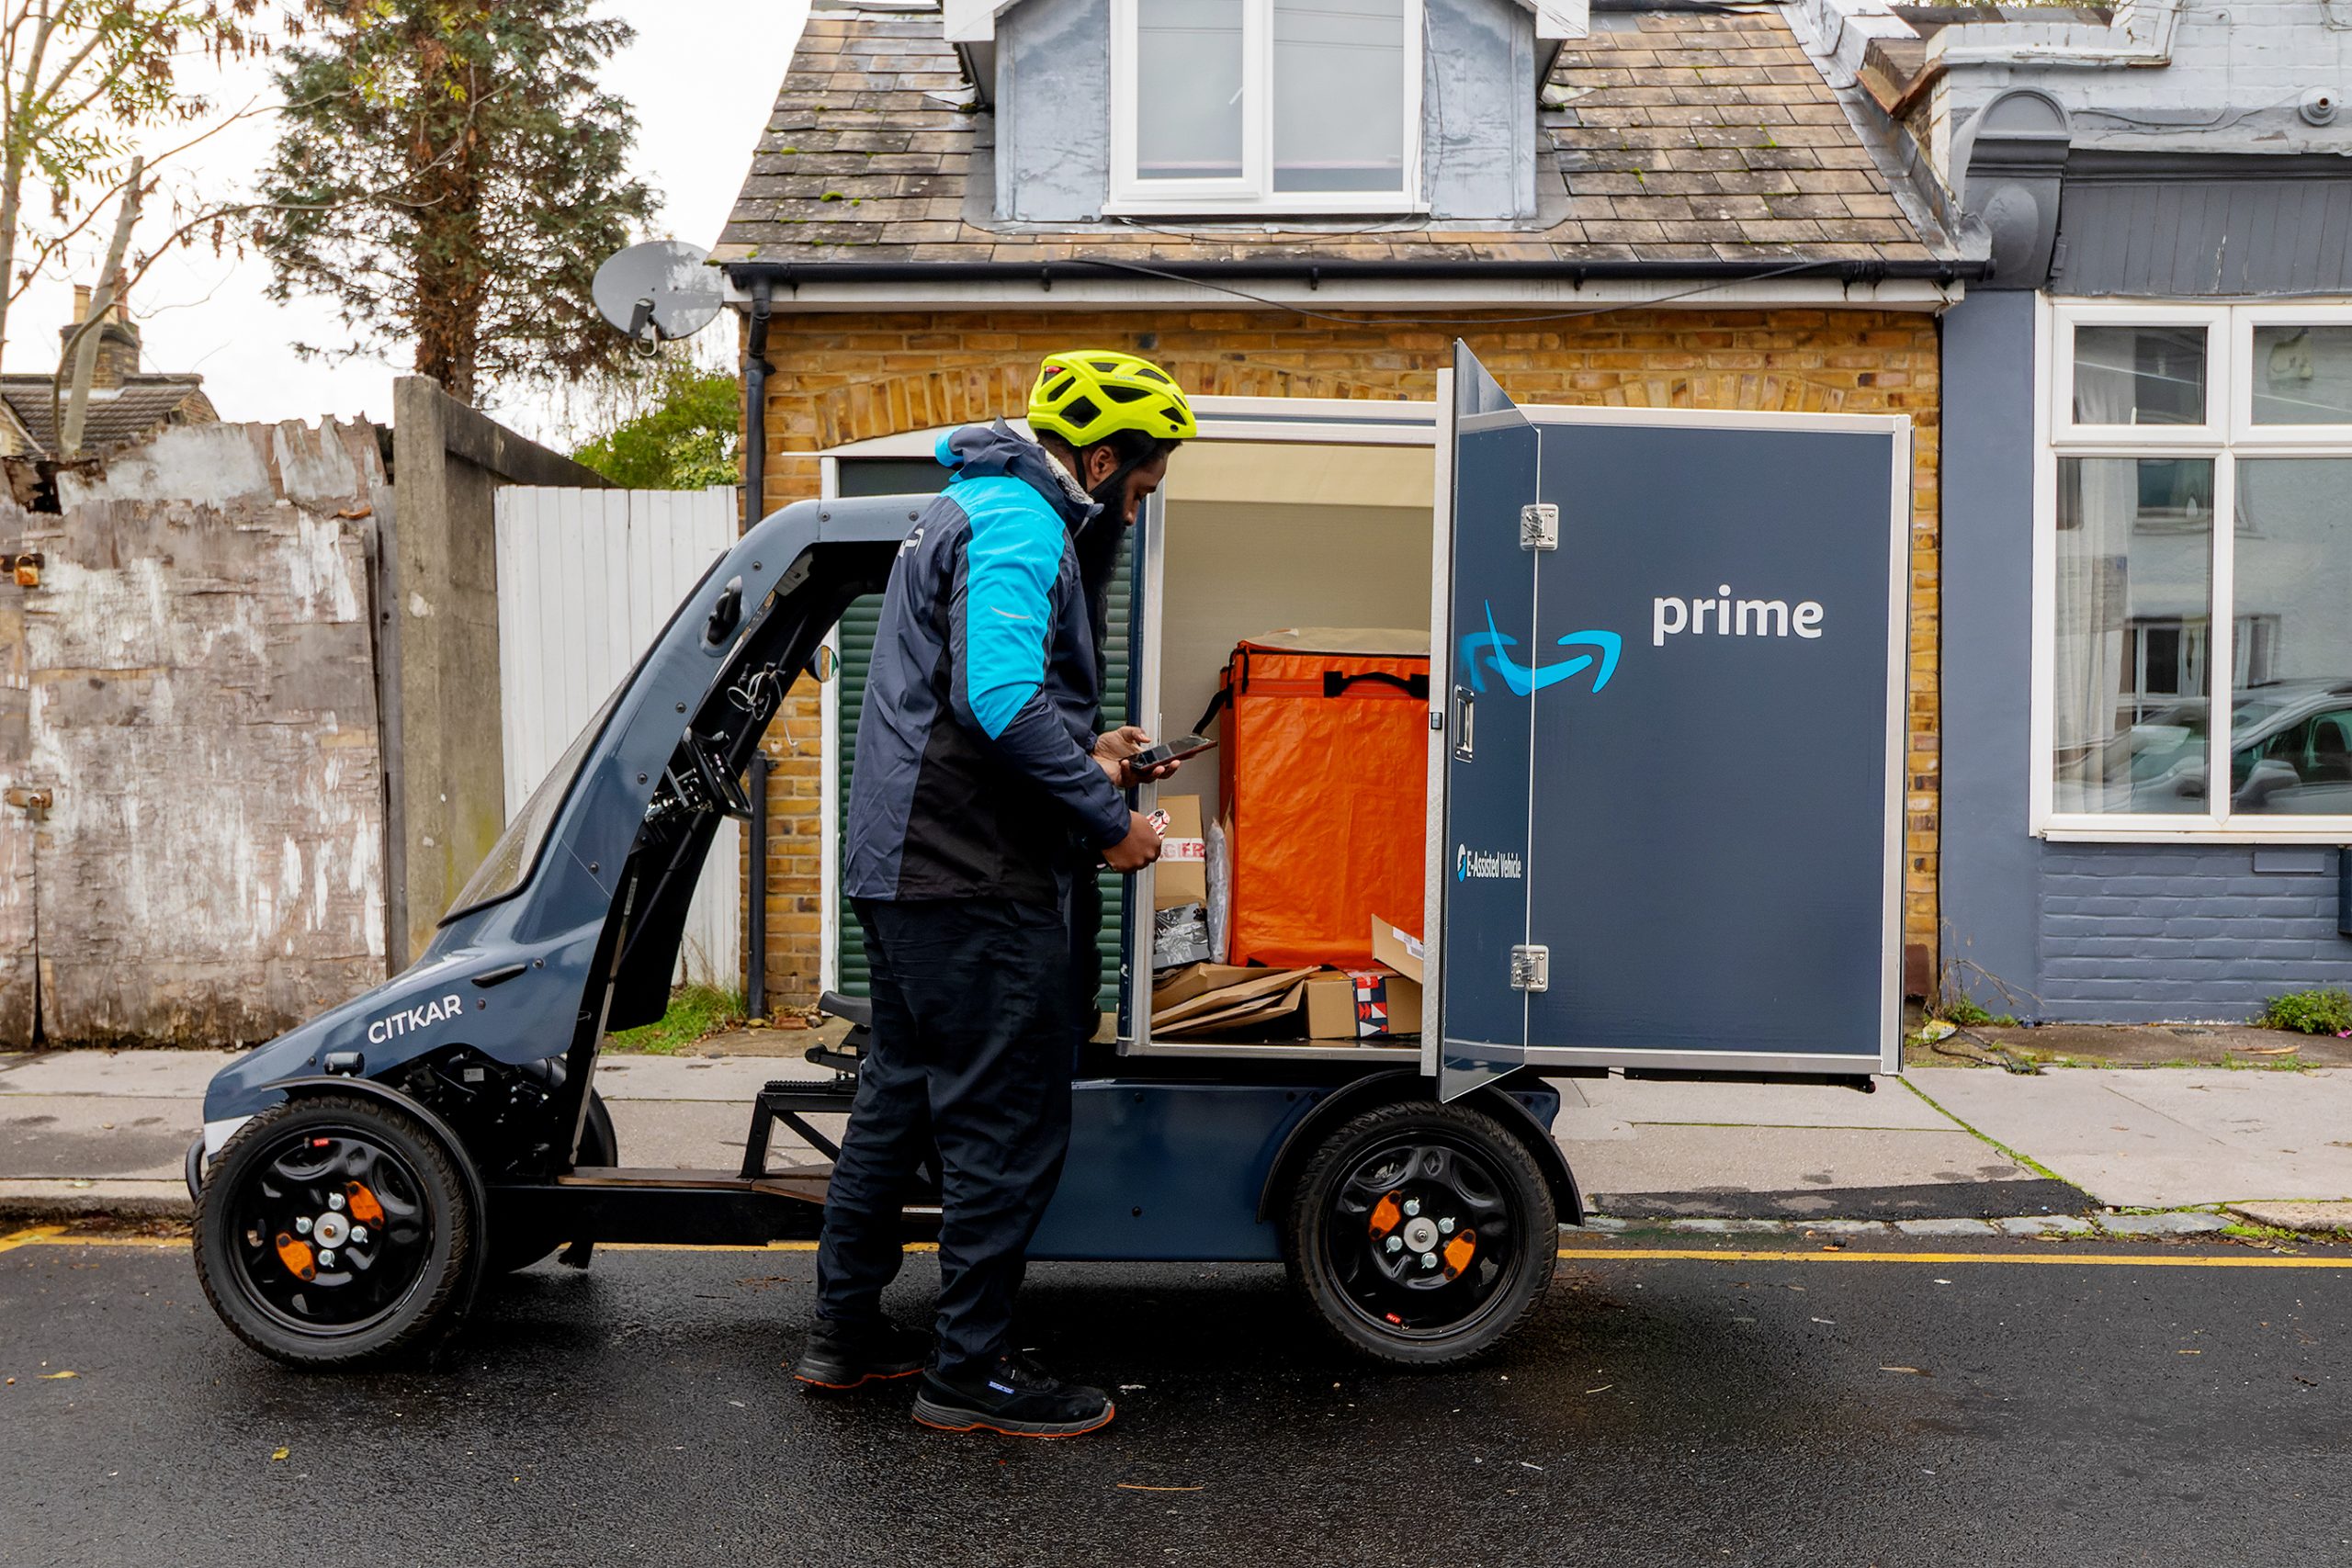 Amazon e-cargo bike launch, DCR2 Croydon
Picture shows:
Amazon e-cargo bikes at CDR2 and around Croydon